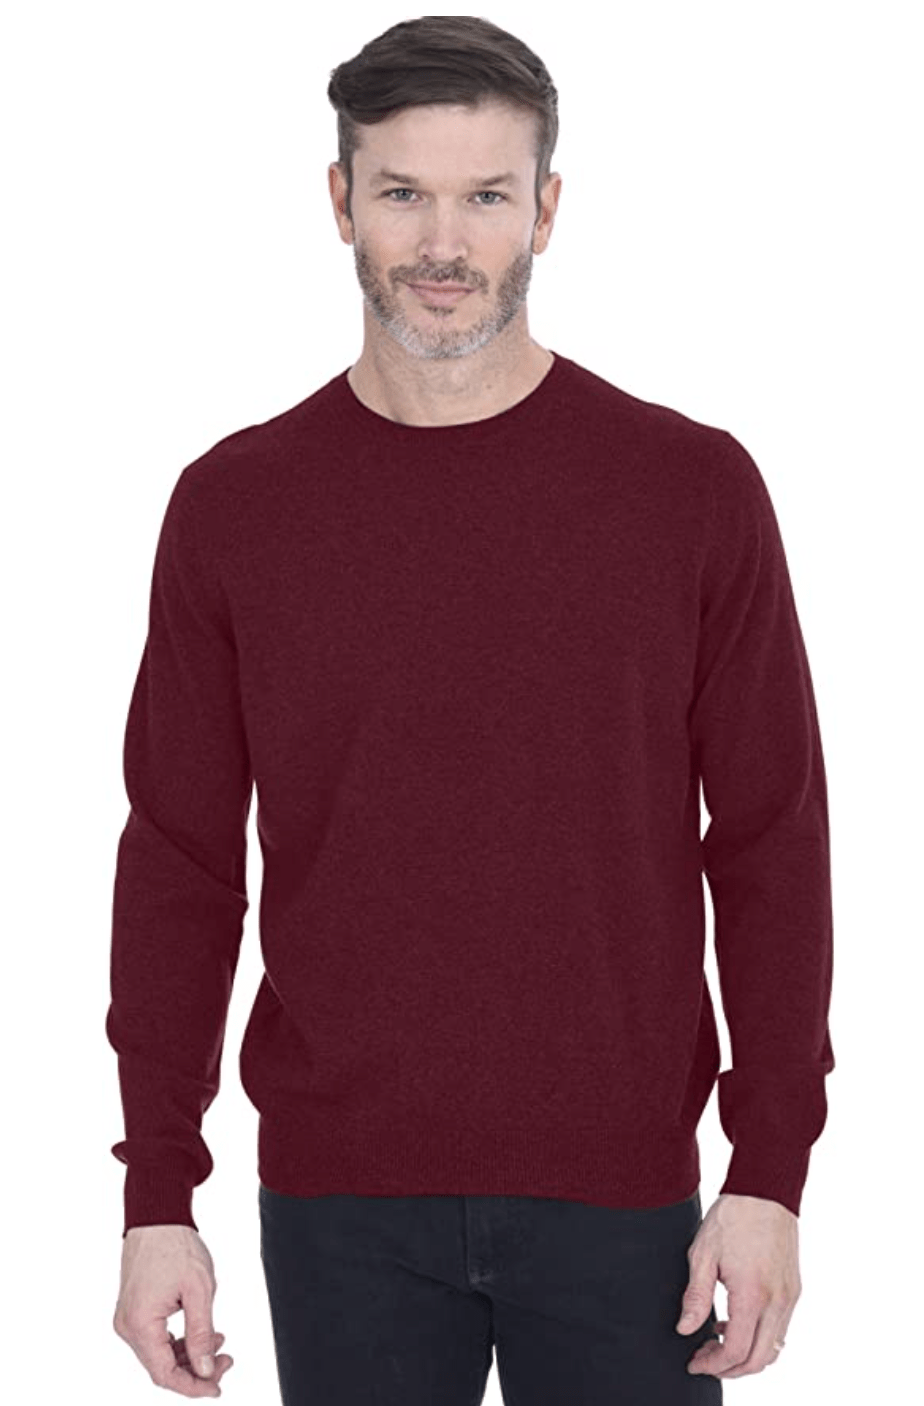 Cashmeren Men's Basic Crewneck Sweater 100% Pure Cashmere